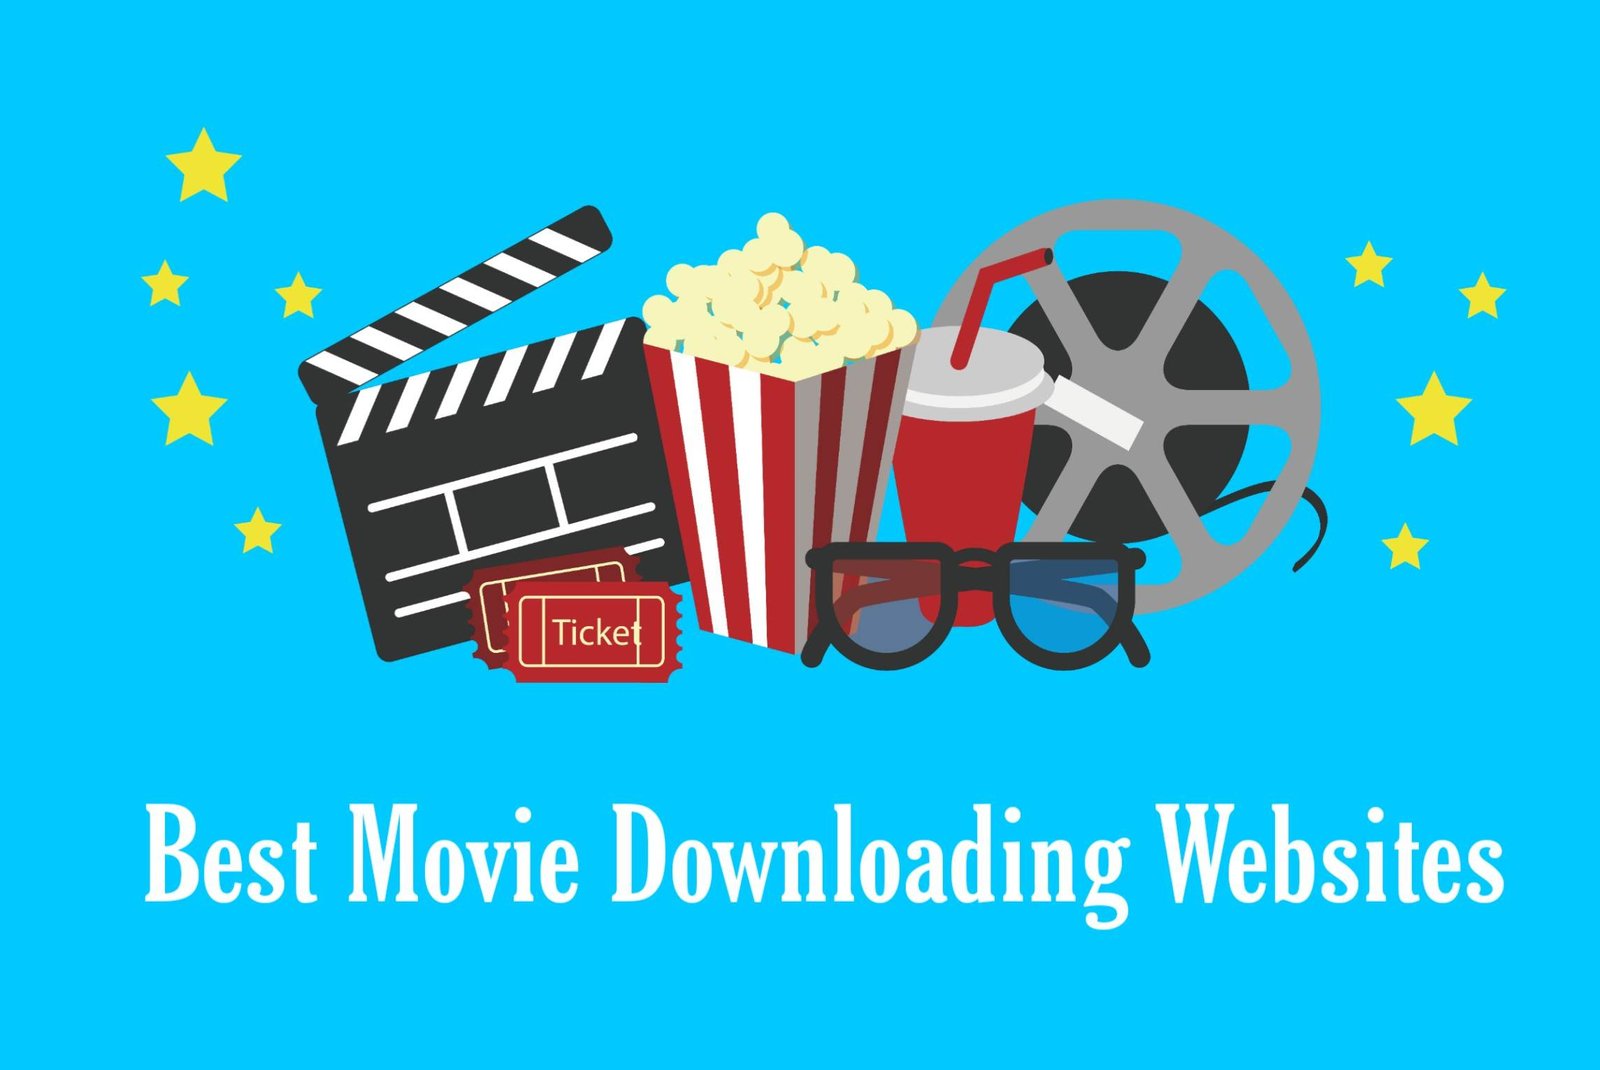 Hindi Dubbed Movies Kaha Se Download Kare? Top 13 Websites List 2019